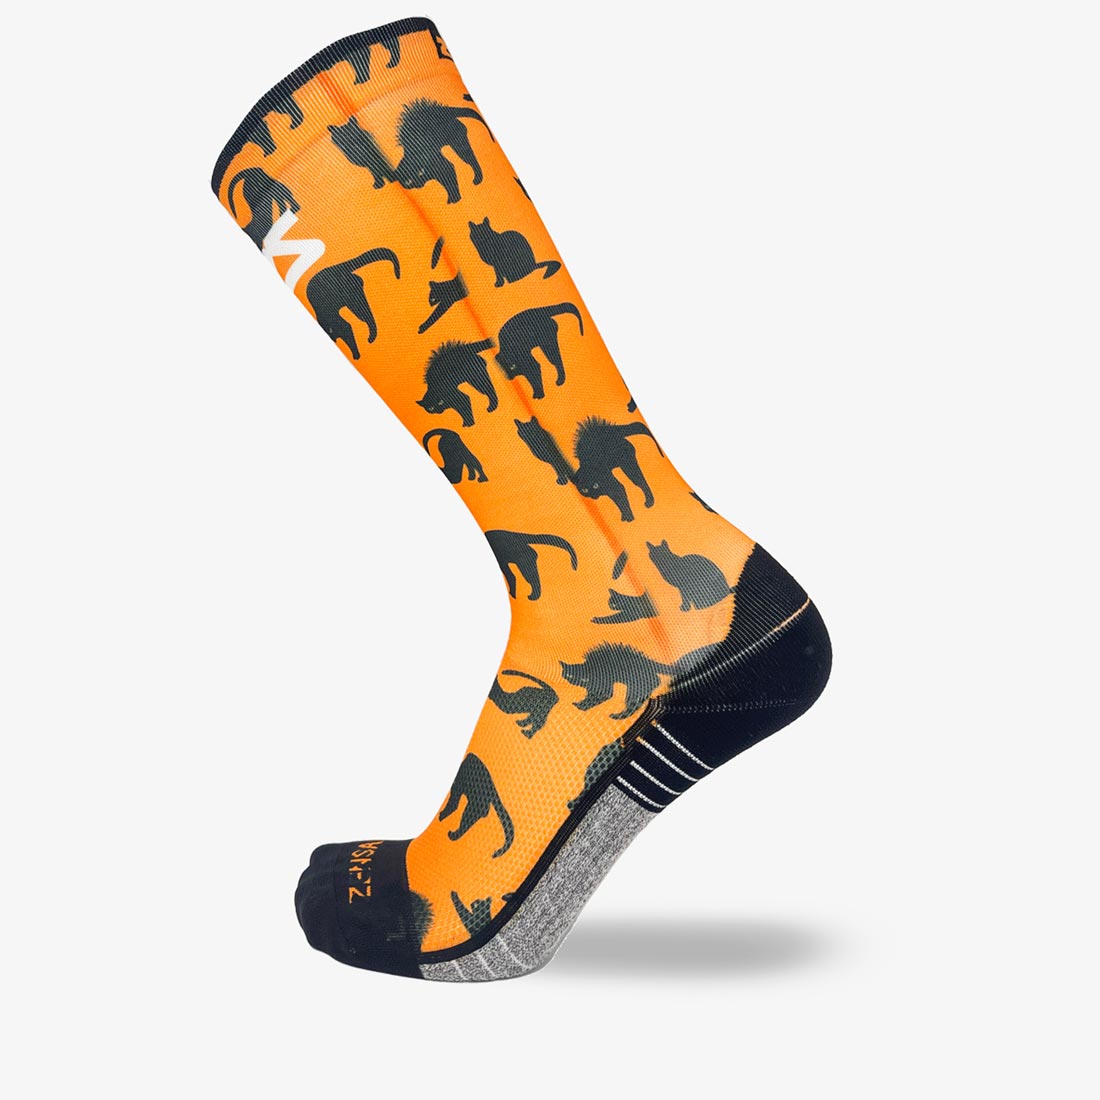 Black Cats Compression Socks (Knee-High)Socks - Zensah